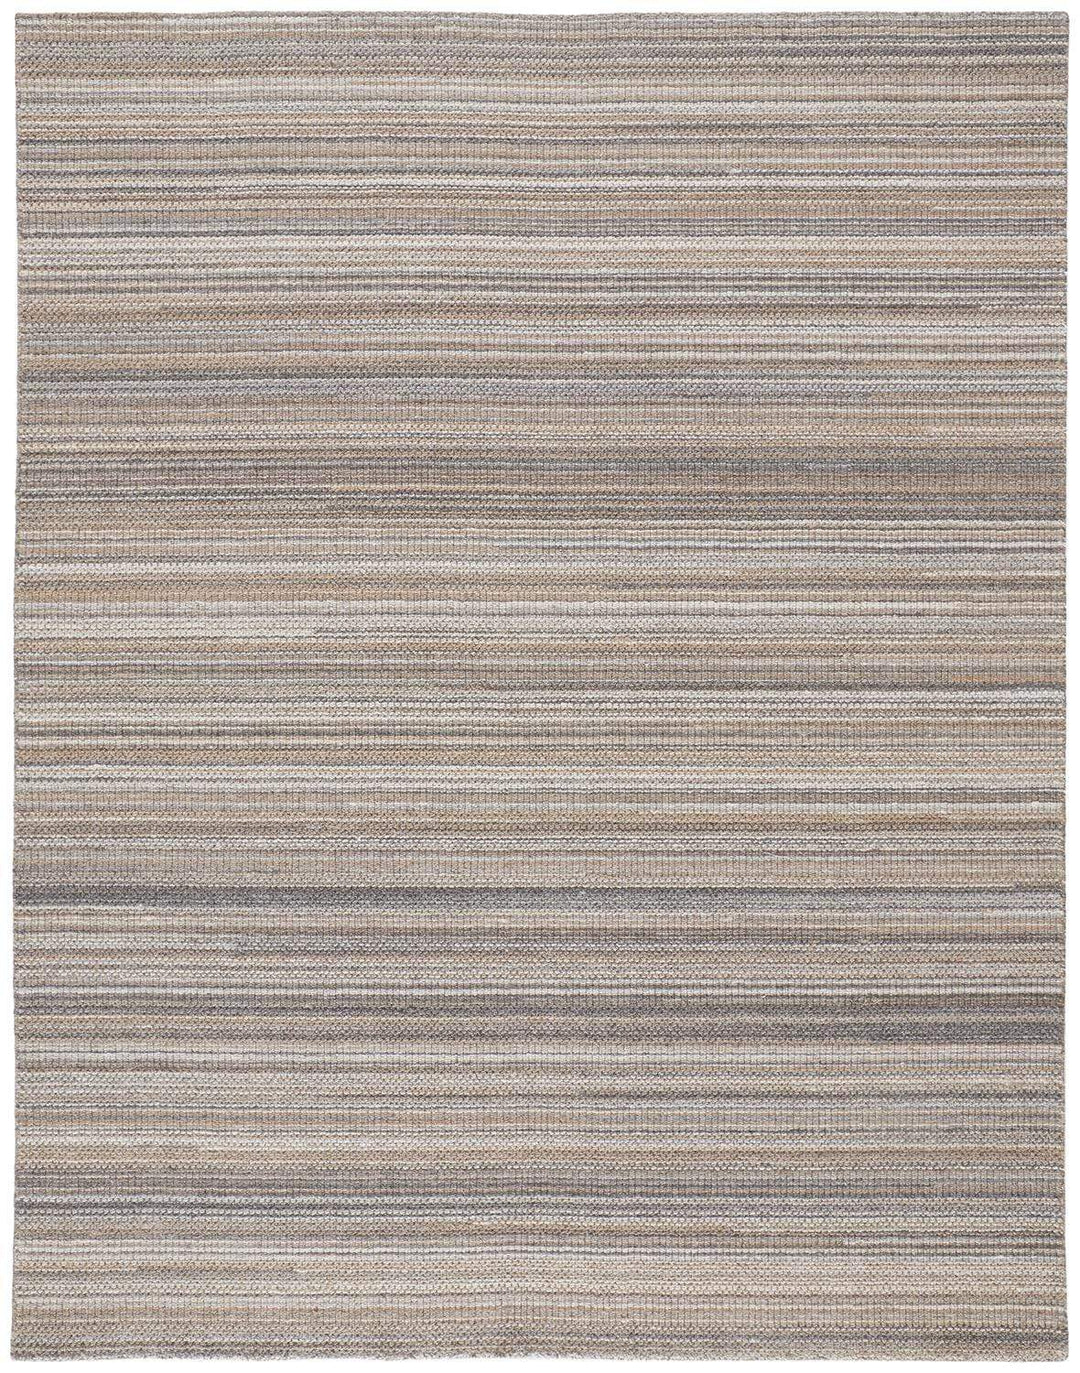 Feizy Feizy Keaton Handmade Wool Neutral Stripe Rug - Tan & Silver Gray - Available in 6 Sizes 4' x 6' KTN8018FBRNMLTC00